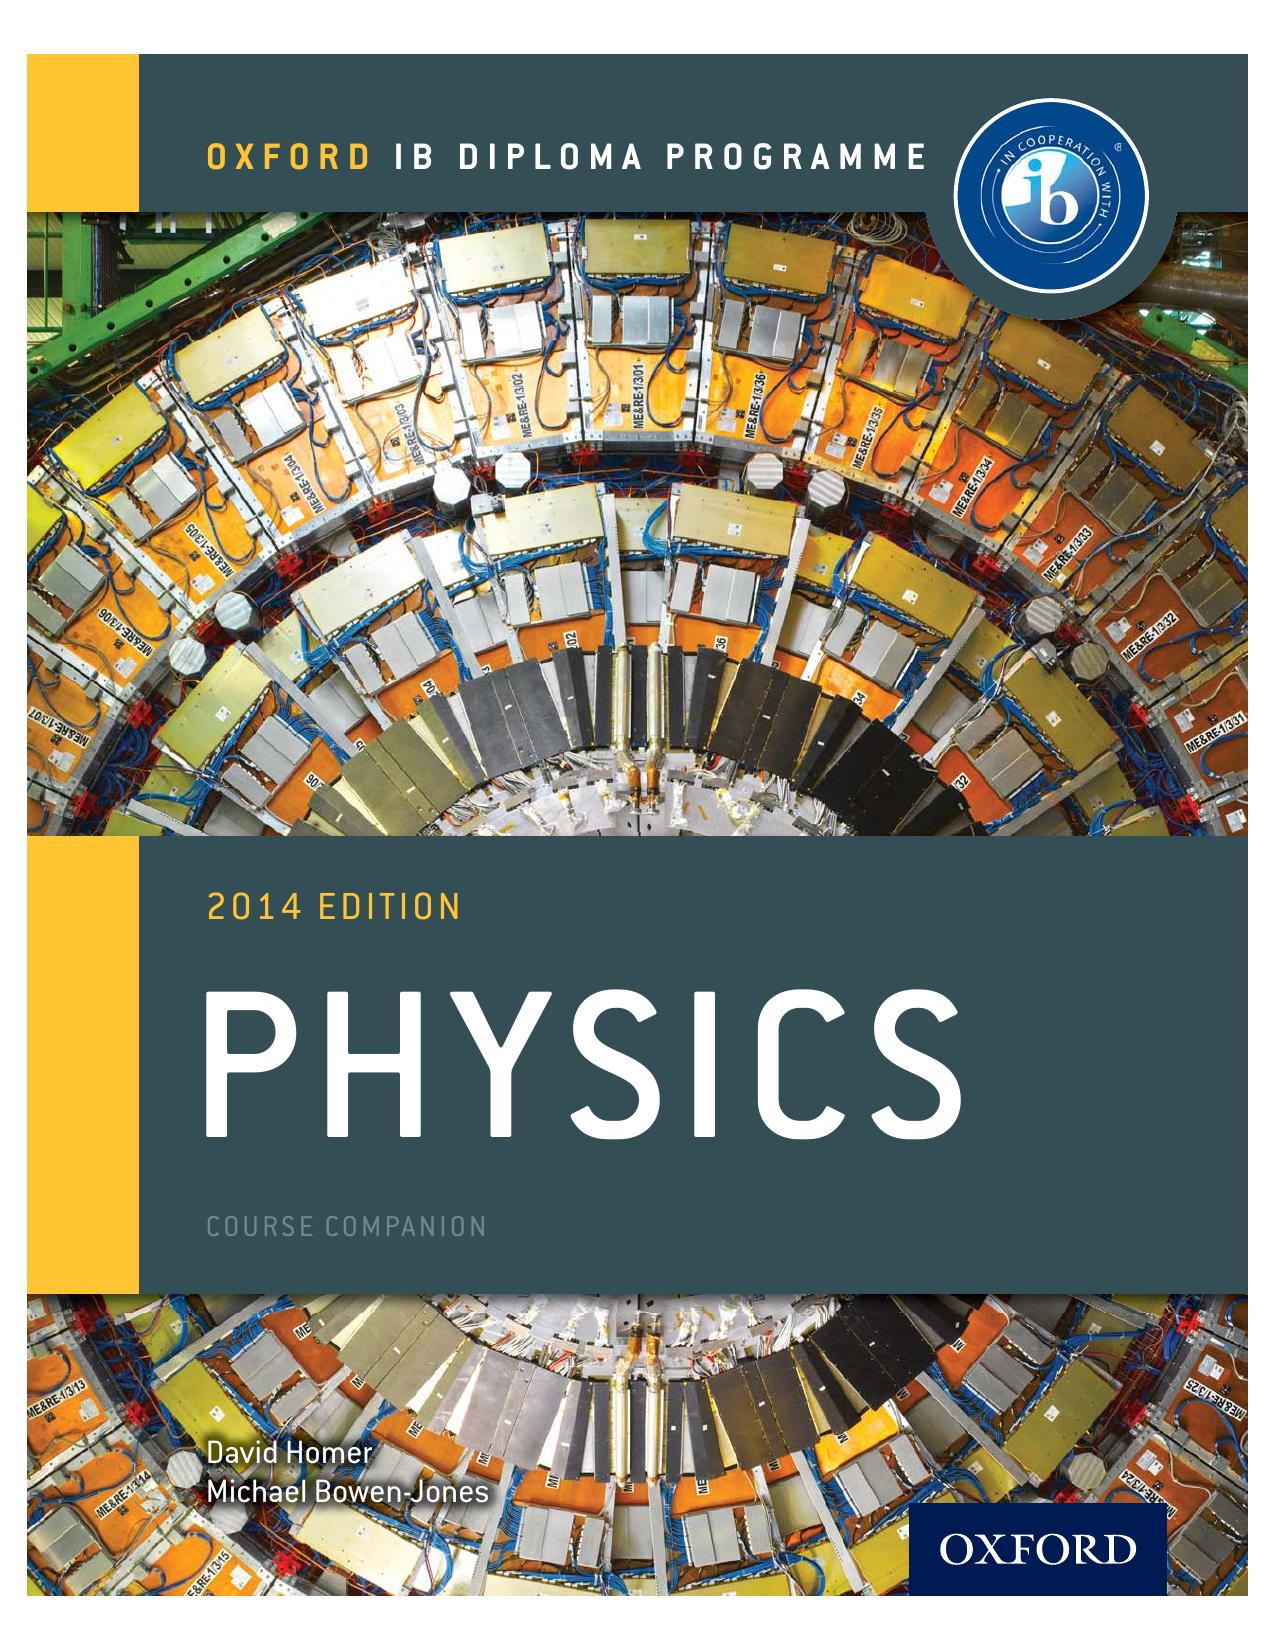 Oxford Physics 2014.pdf